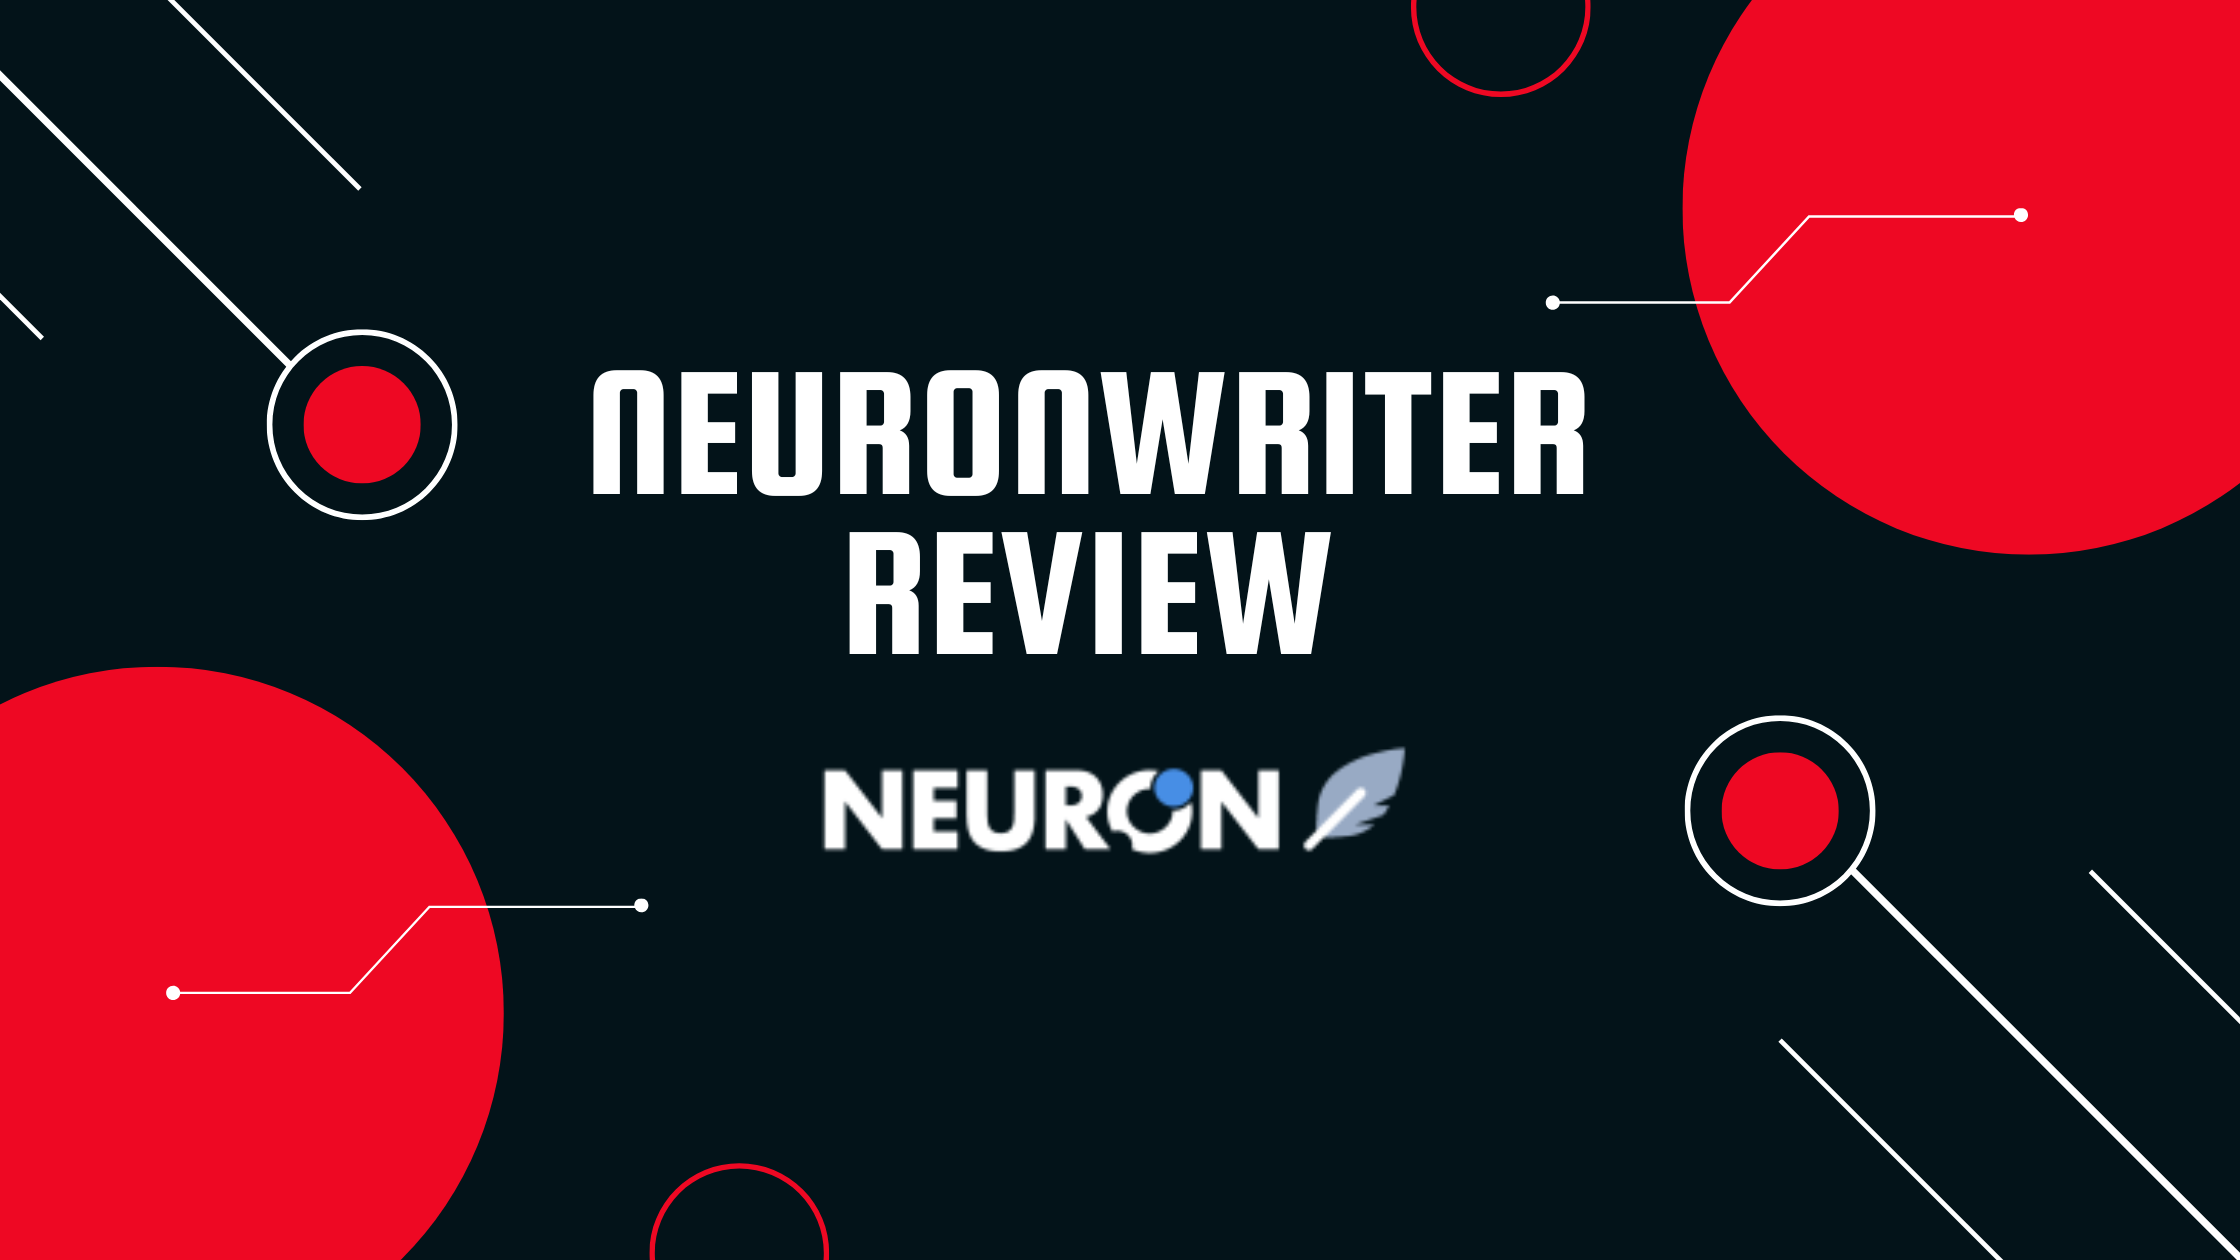 Neuronwriter Review